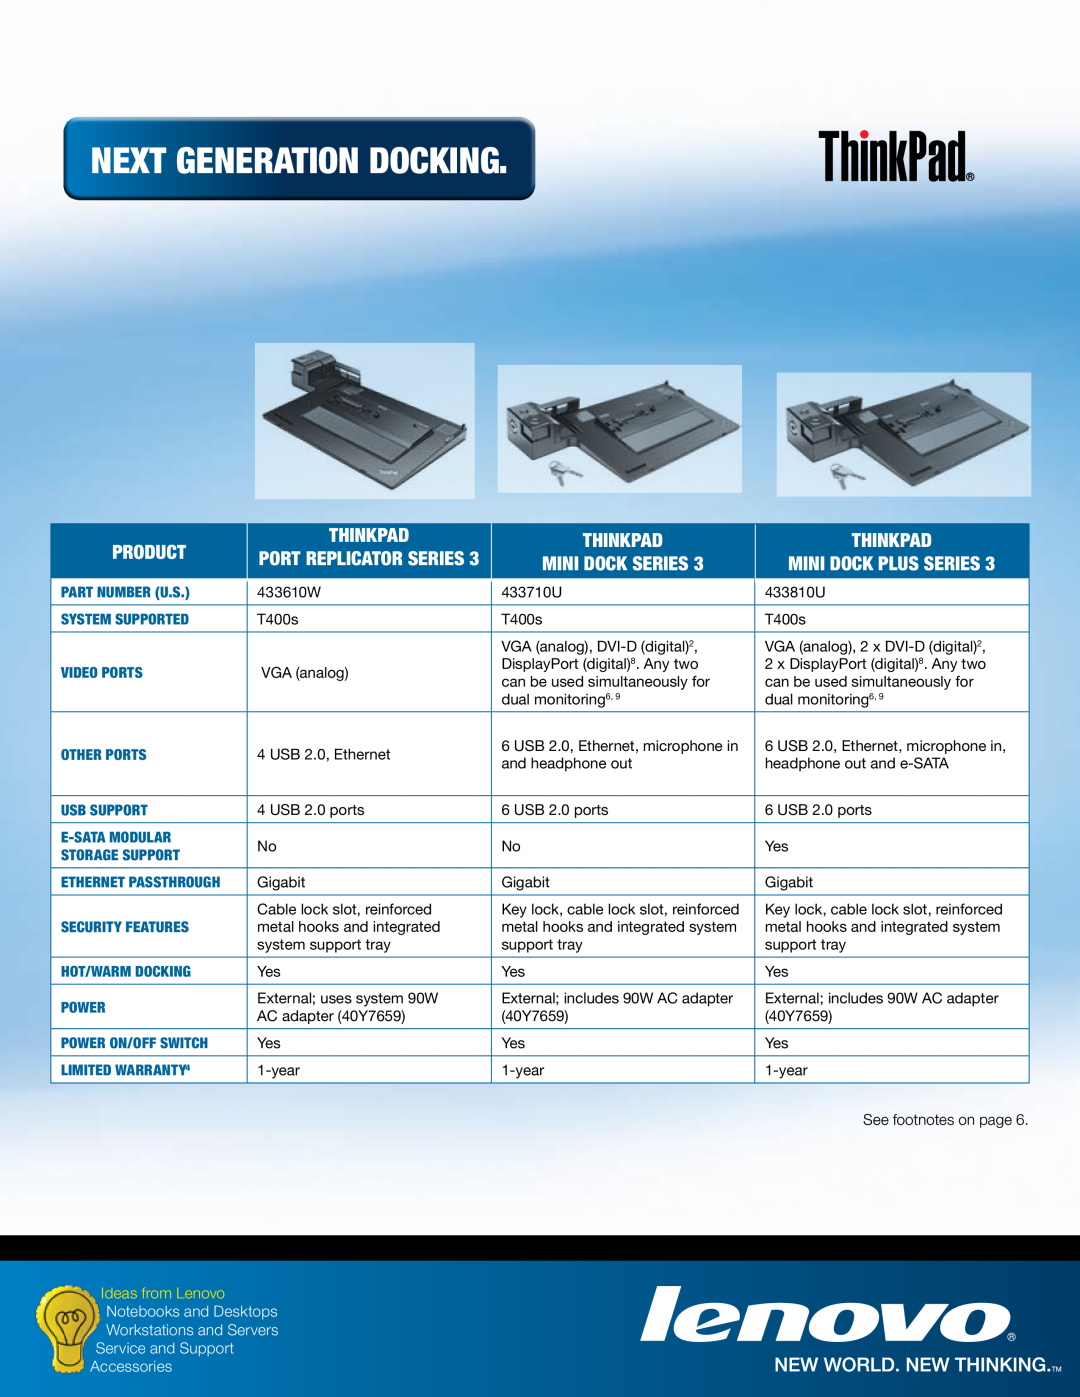 Lenovo 250410U Next Generation Docking, Port Replicator Series, Mini Dock Series, Mini Dock Plus Series, Product, ThinkPad 